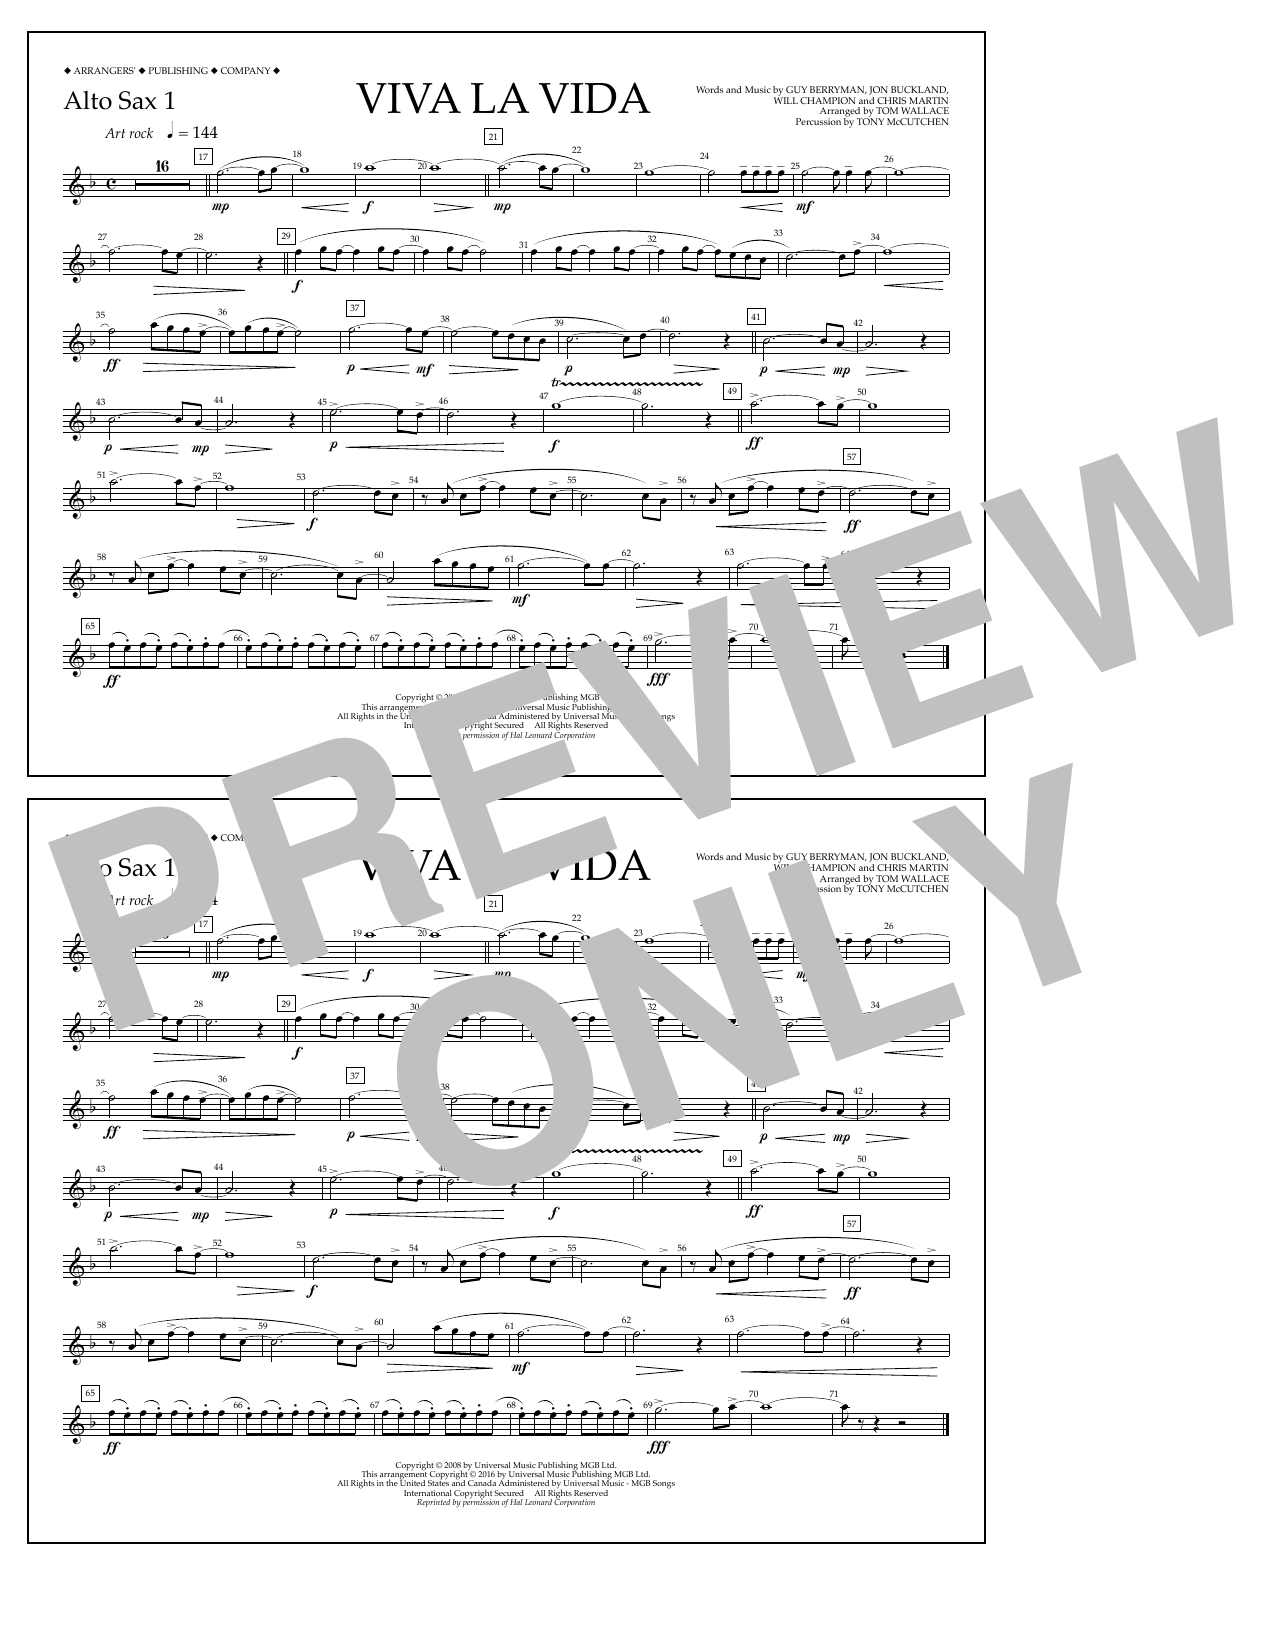 Tom Wallace Viva La Vida - Alto Sax 1 Sheet Music Notes & Chords for Marching Band - Download or Print PDF